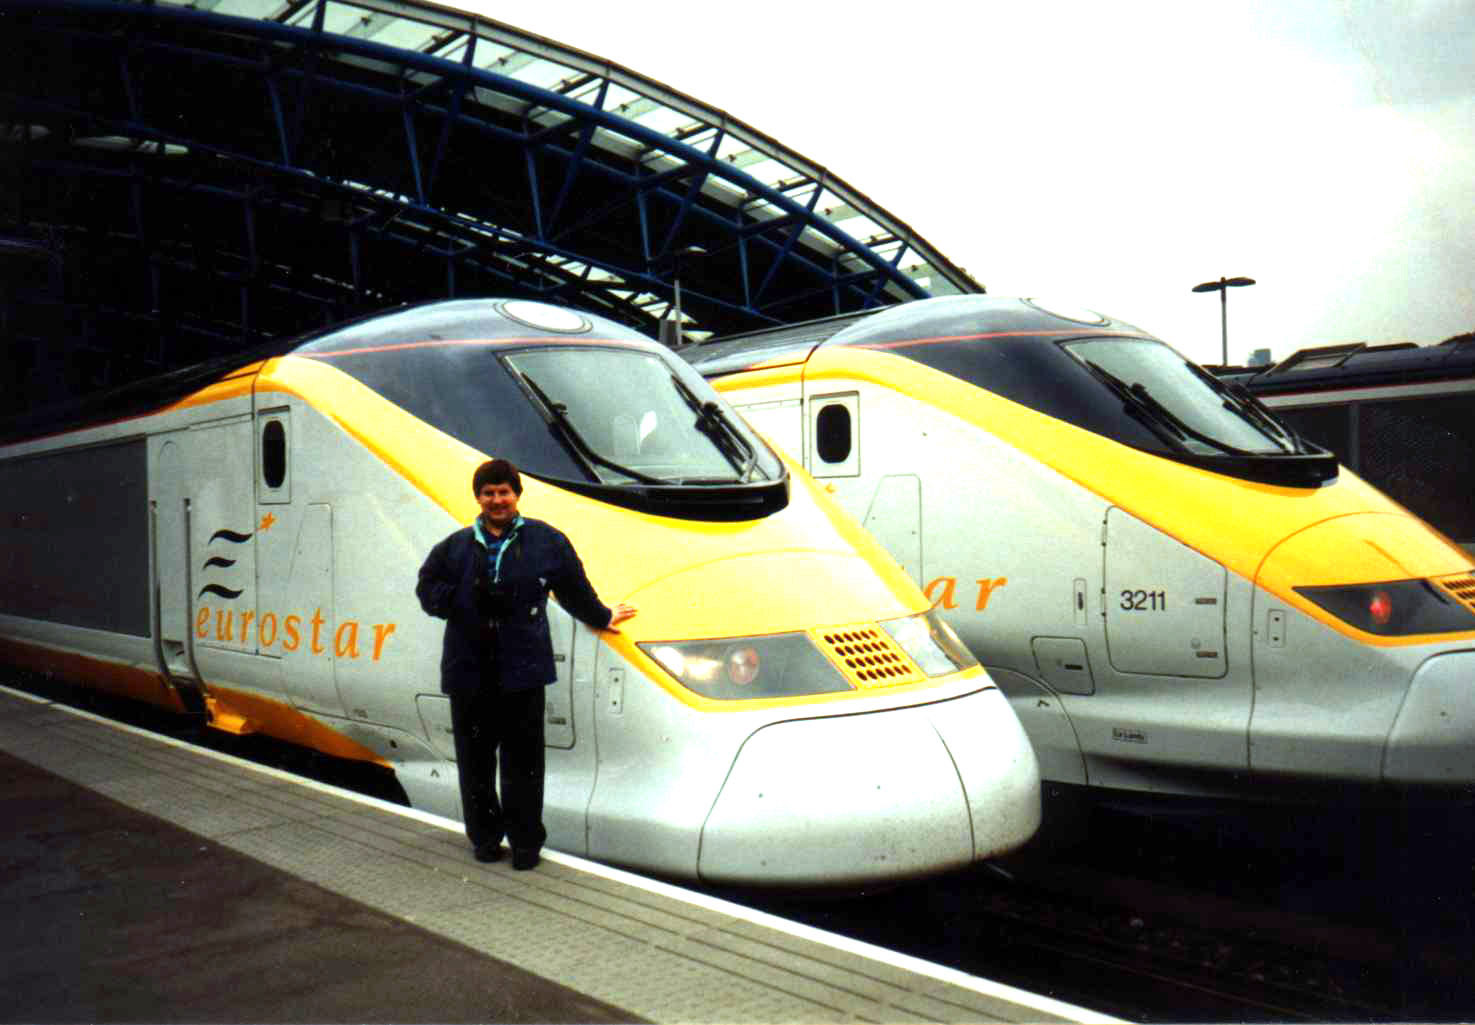 At the high speed train "Eurostar", Waterloo Rail Way Station, London, UK - March 1995